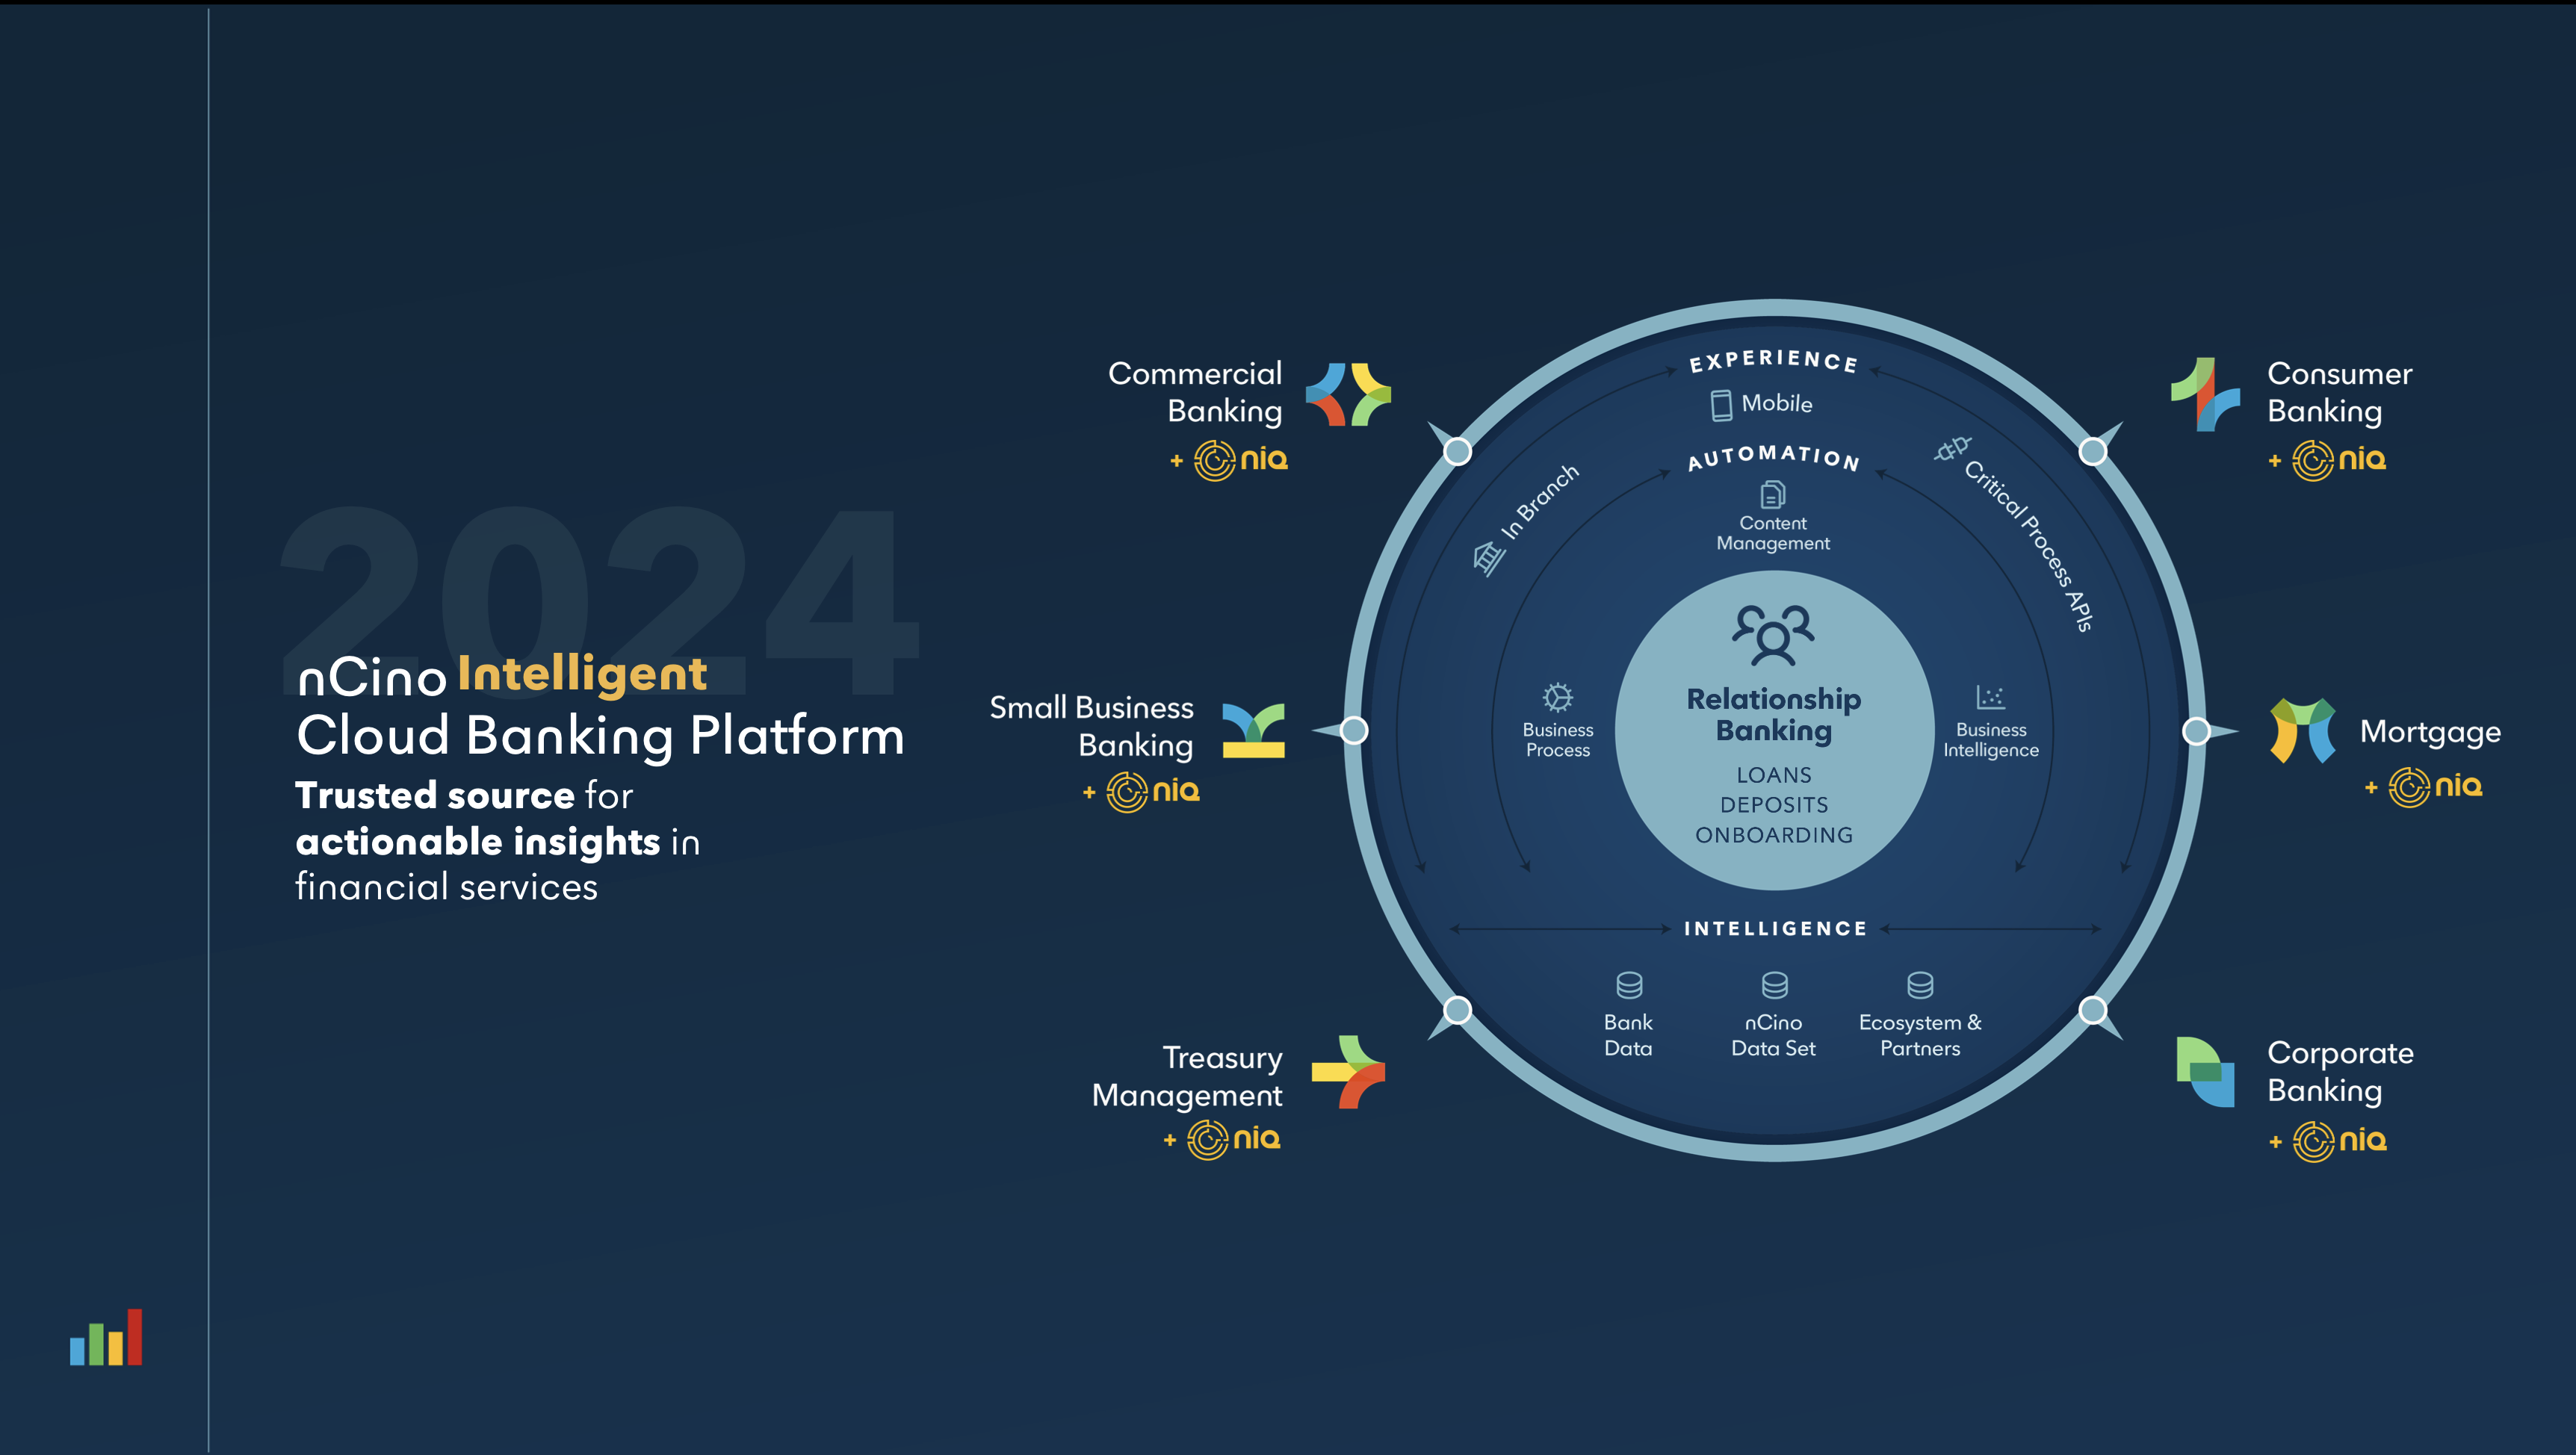 Cloud Banking Platform Overview